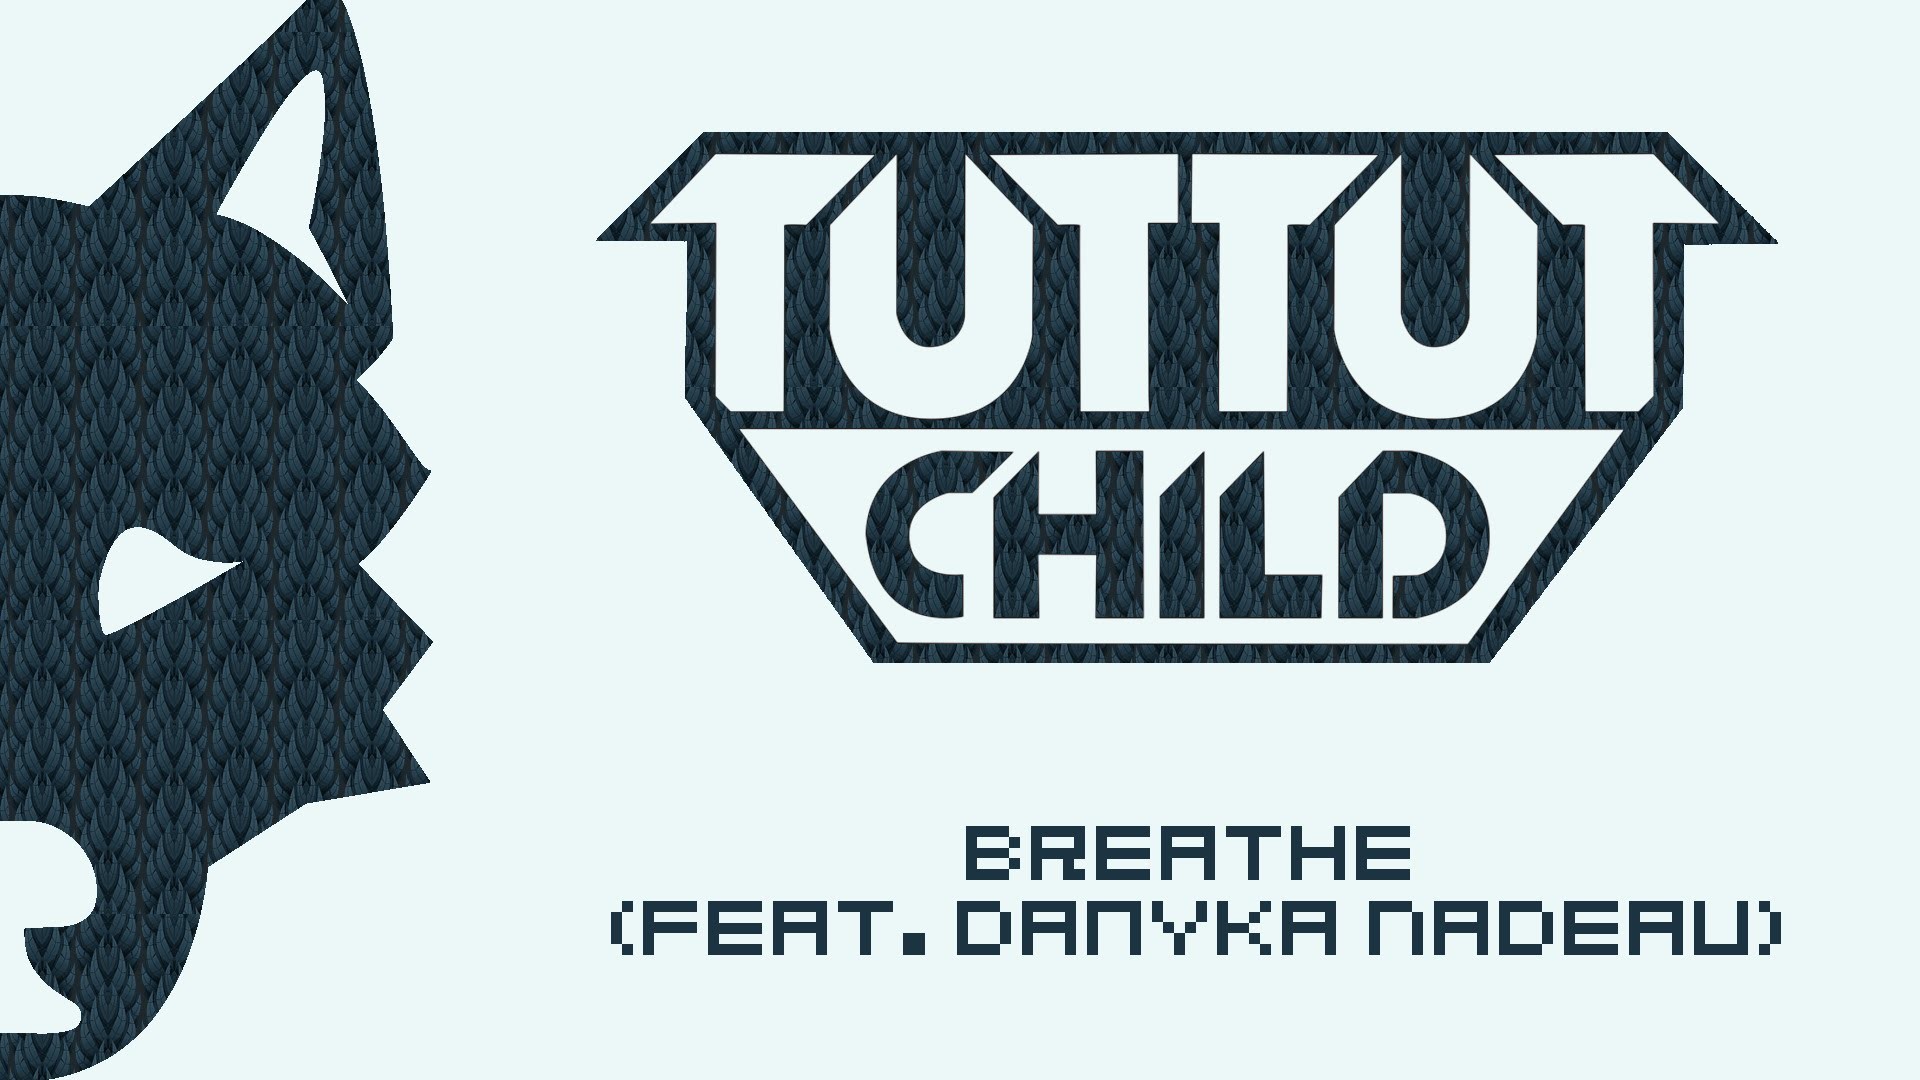 Tut Tut Child - Breathe (feat. Danyka Nadeau)